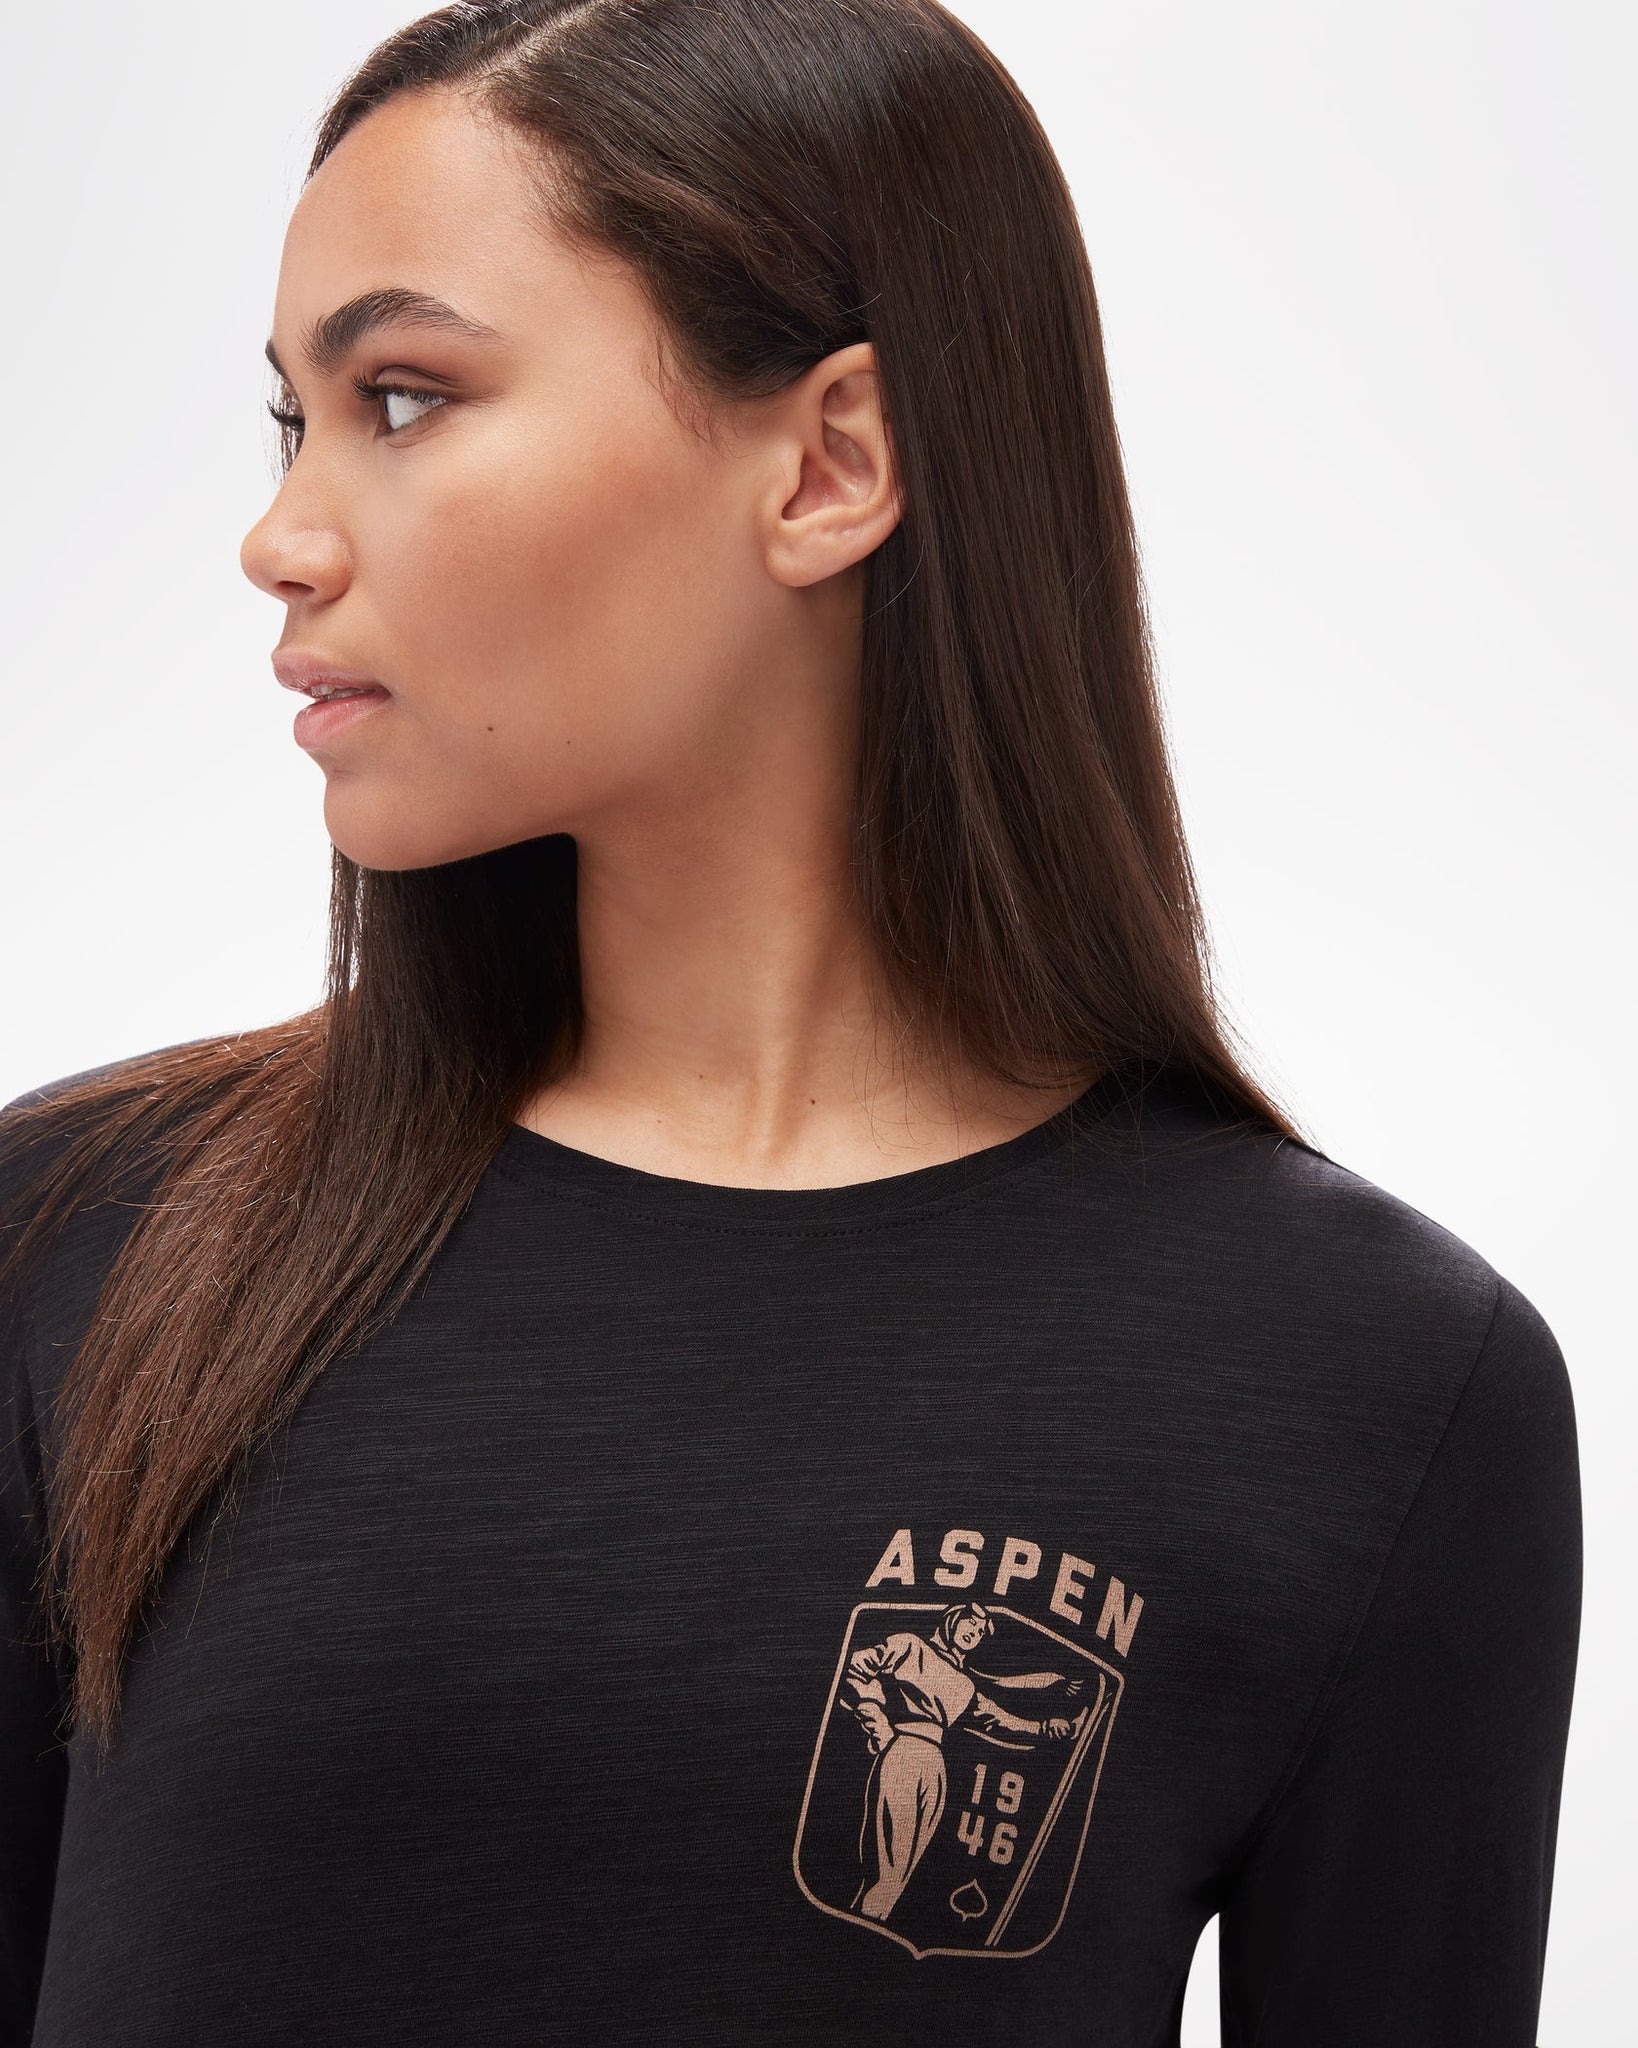 ASPENX Women's Shirts